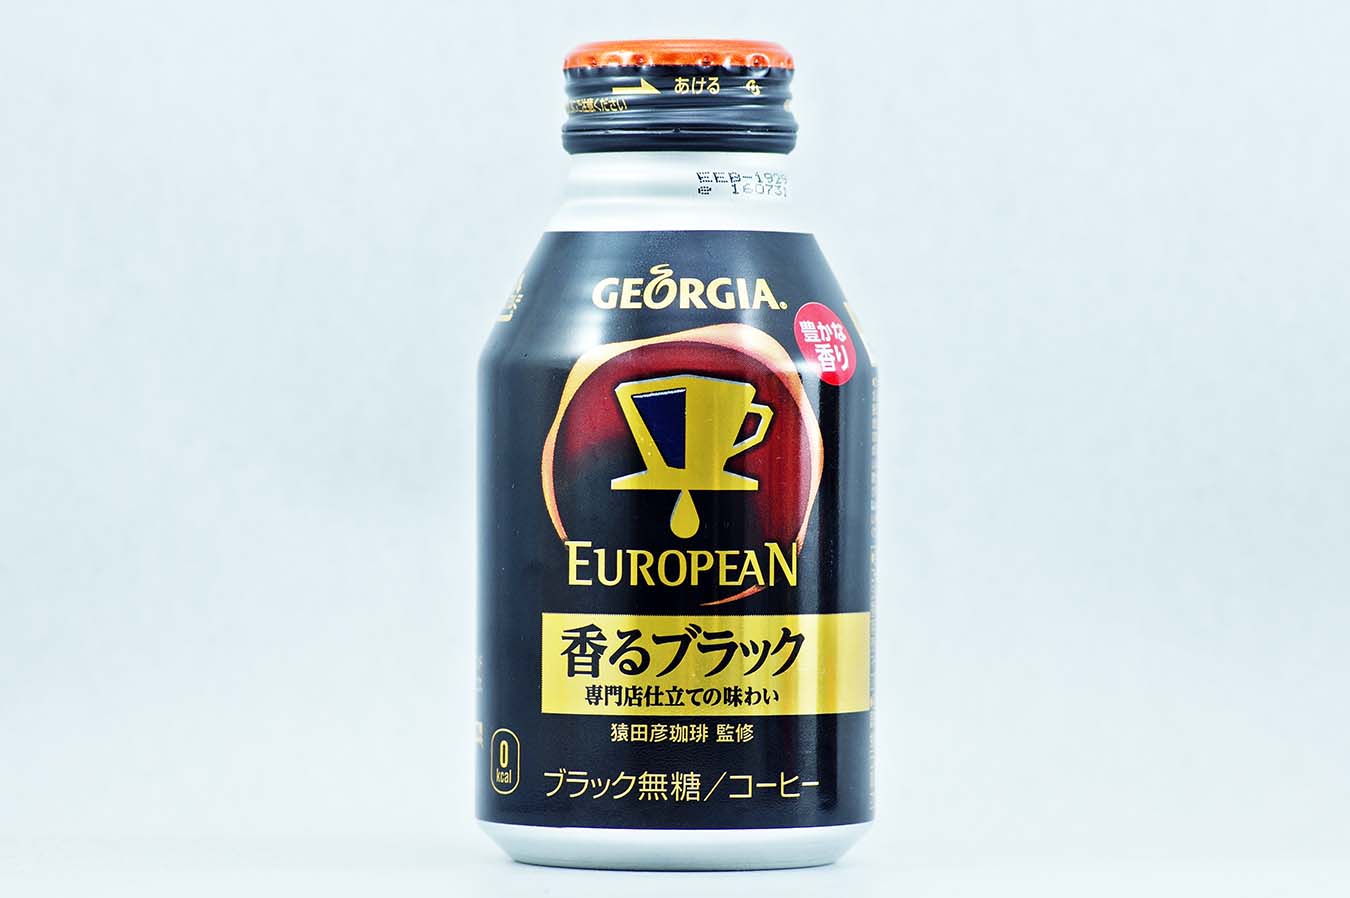 GEORGIA ヨーロピアン 香るブラック 290mlボトル缶 2015年9月